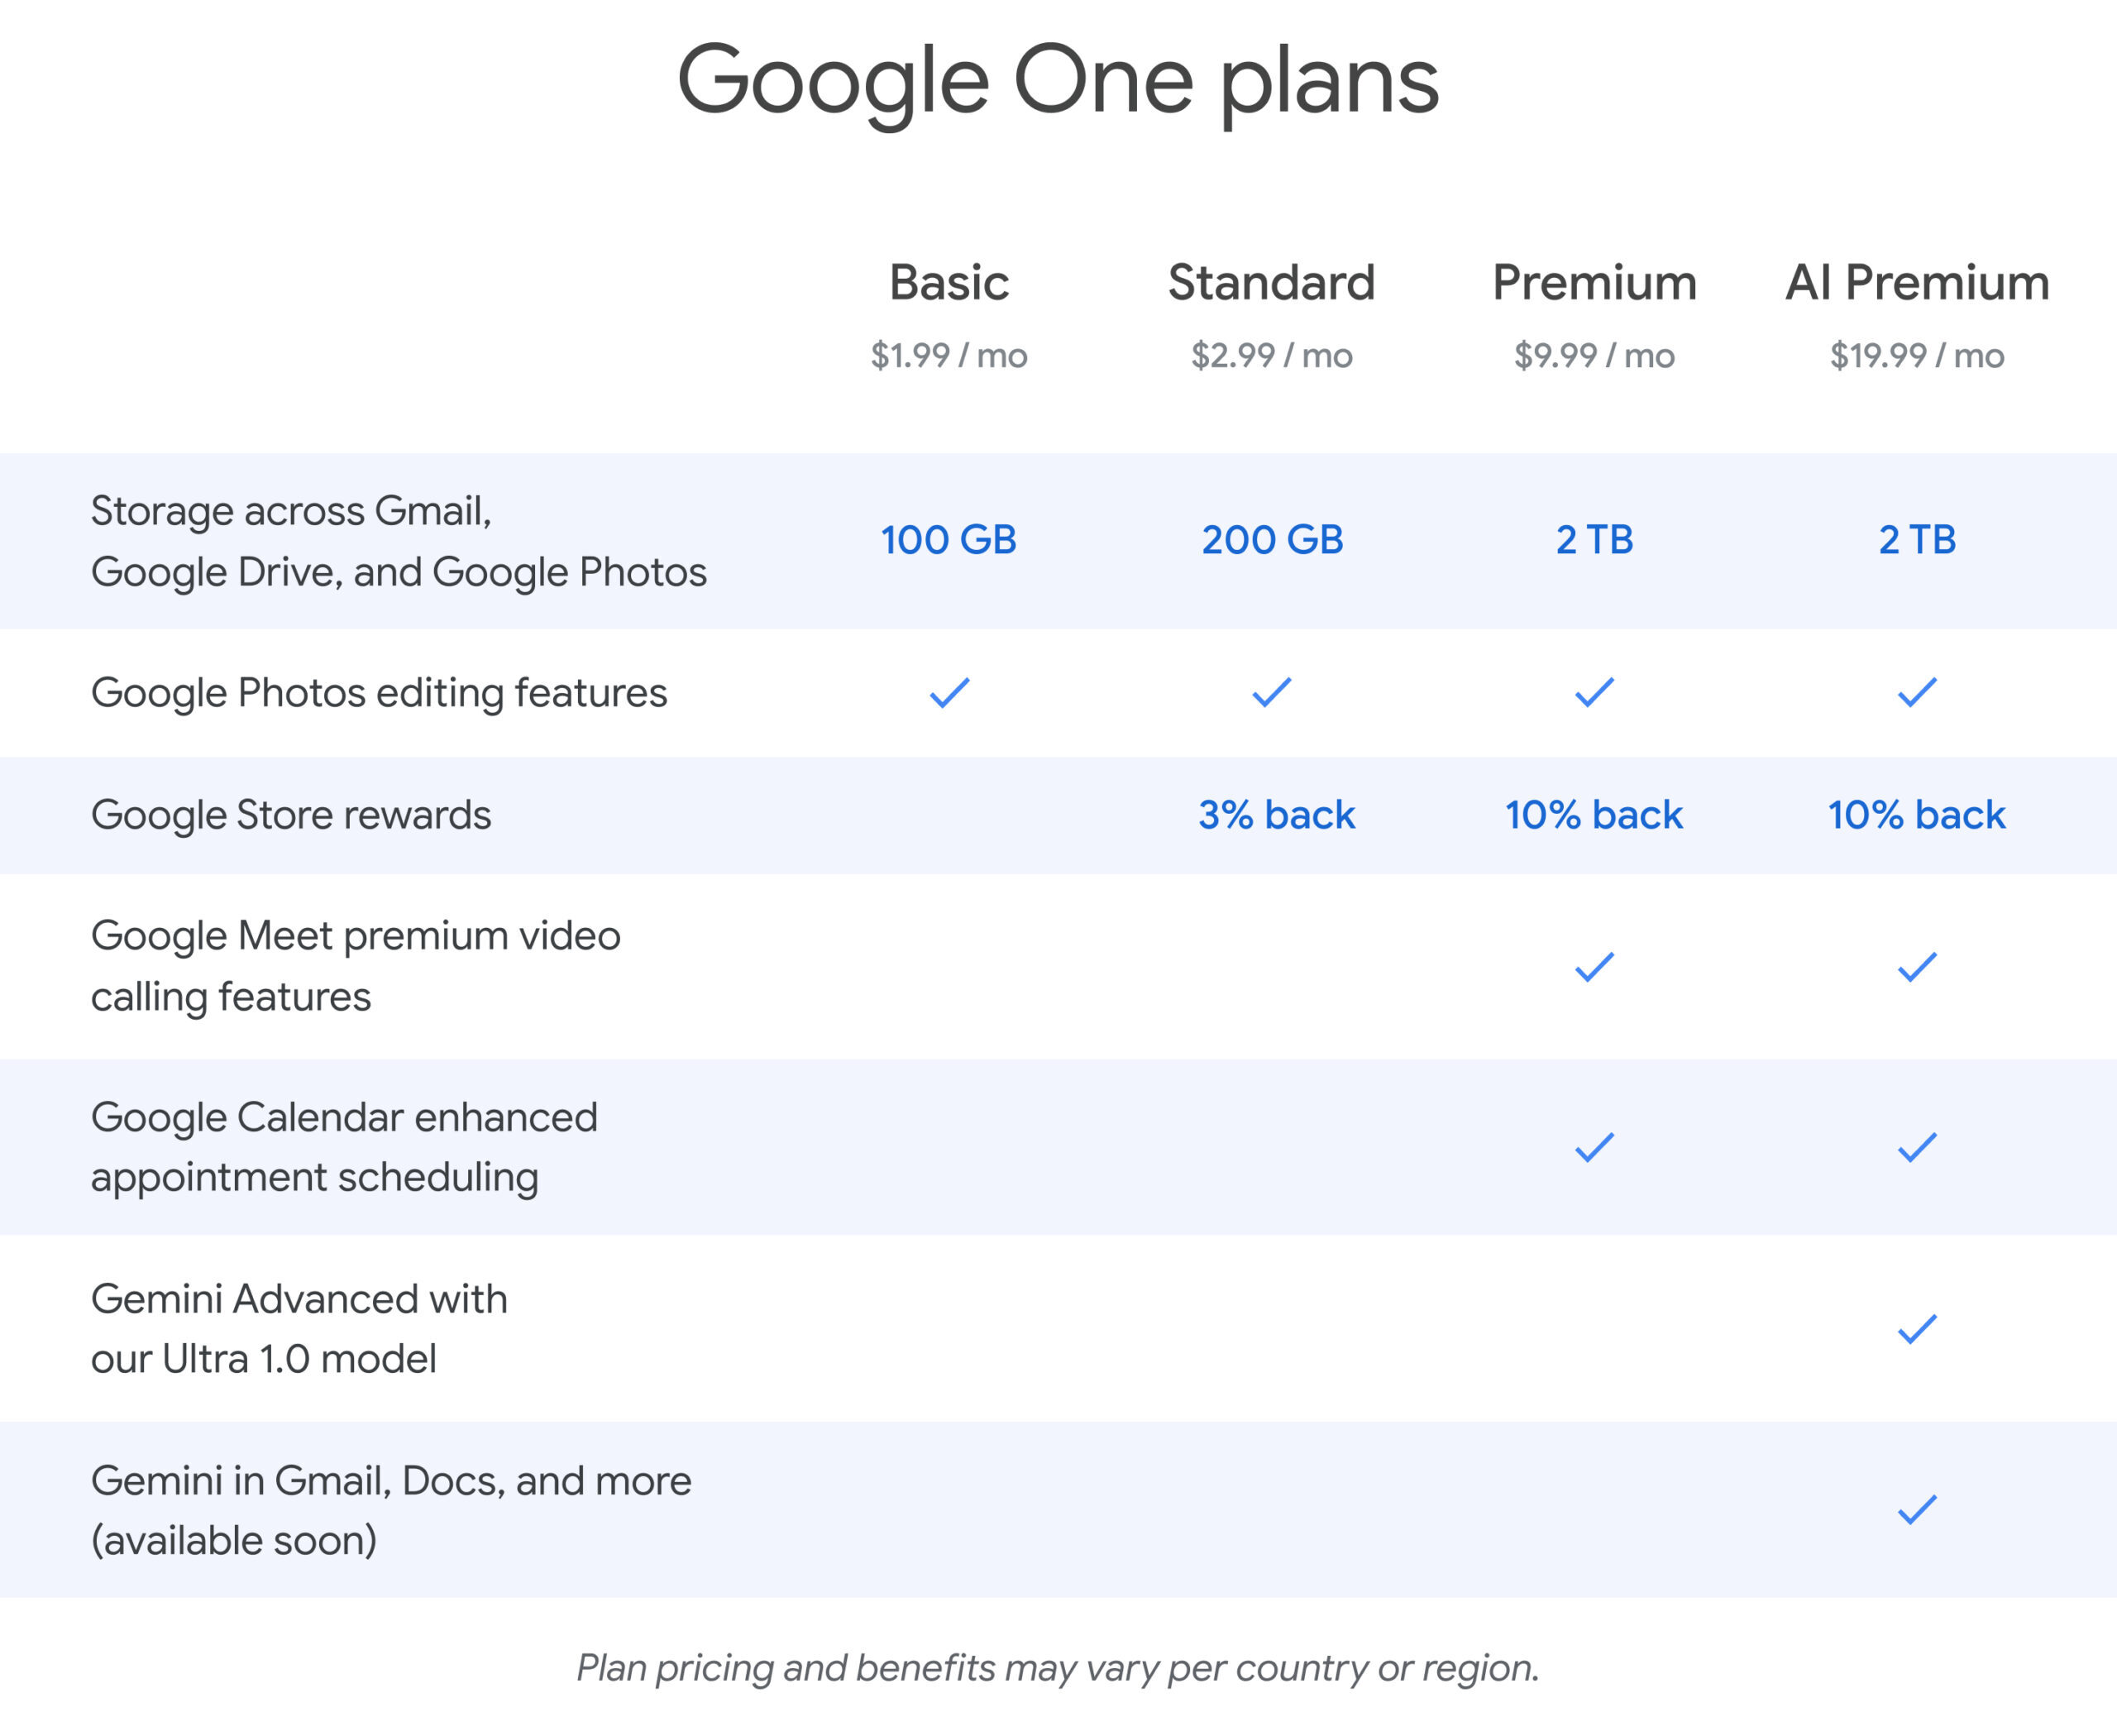 Google One plans